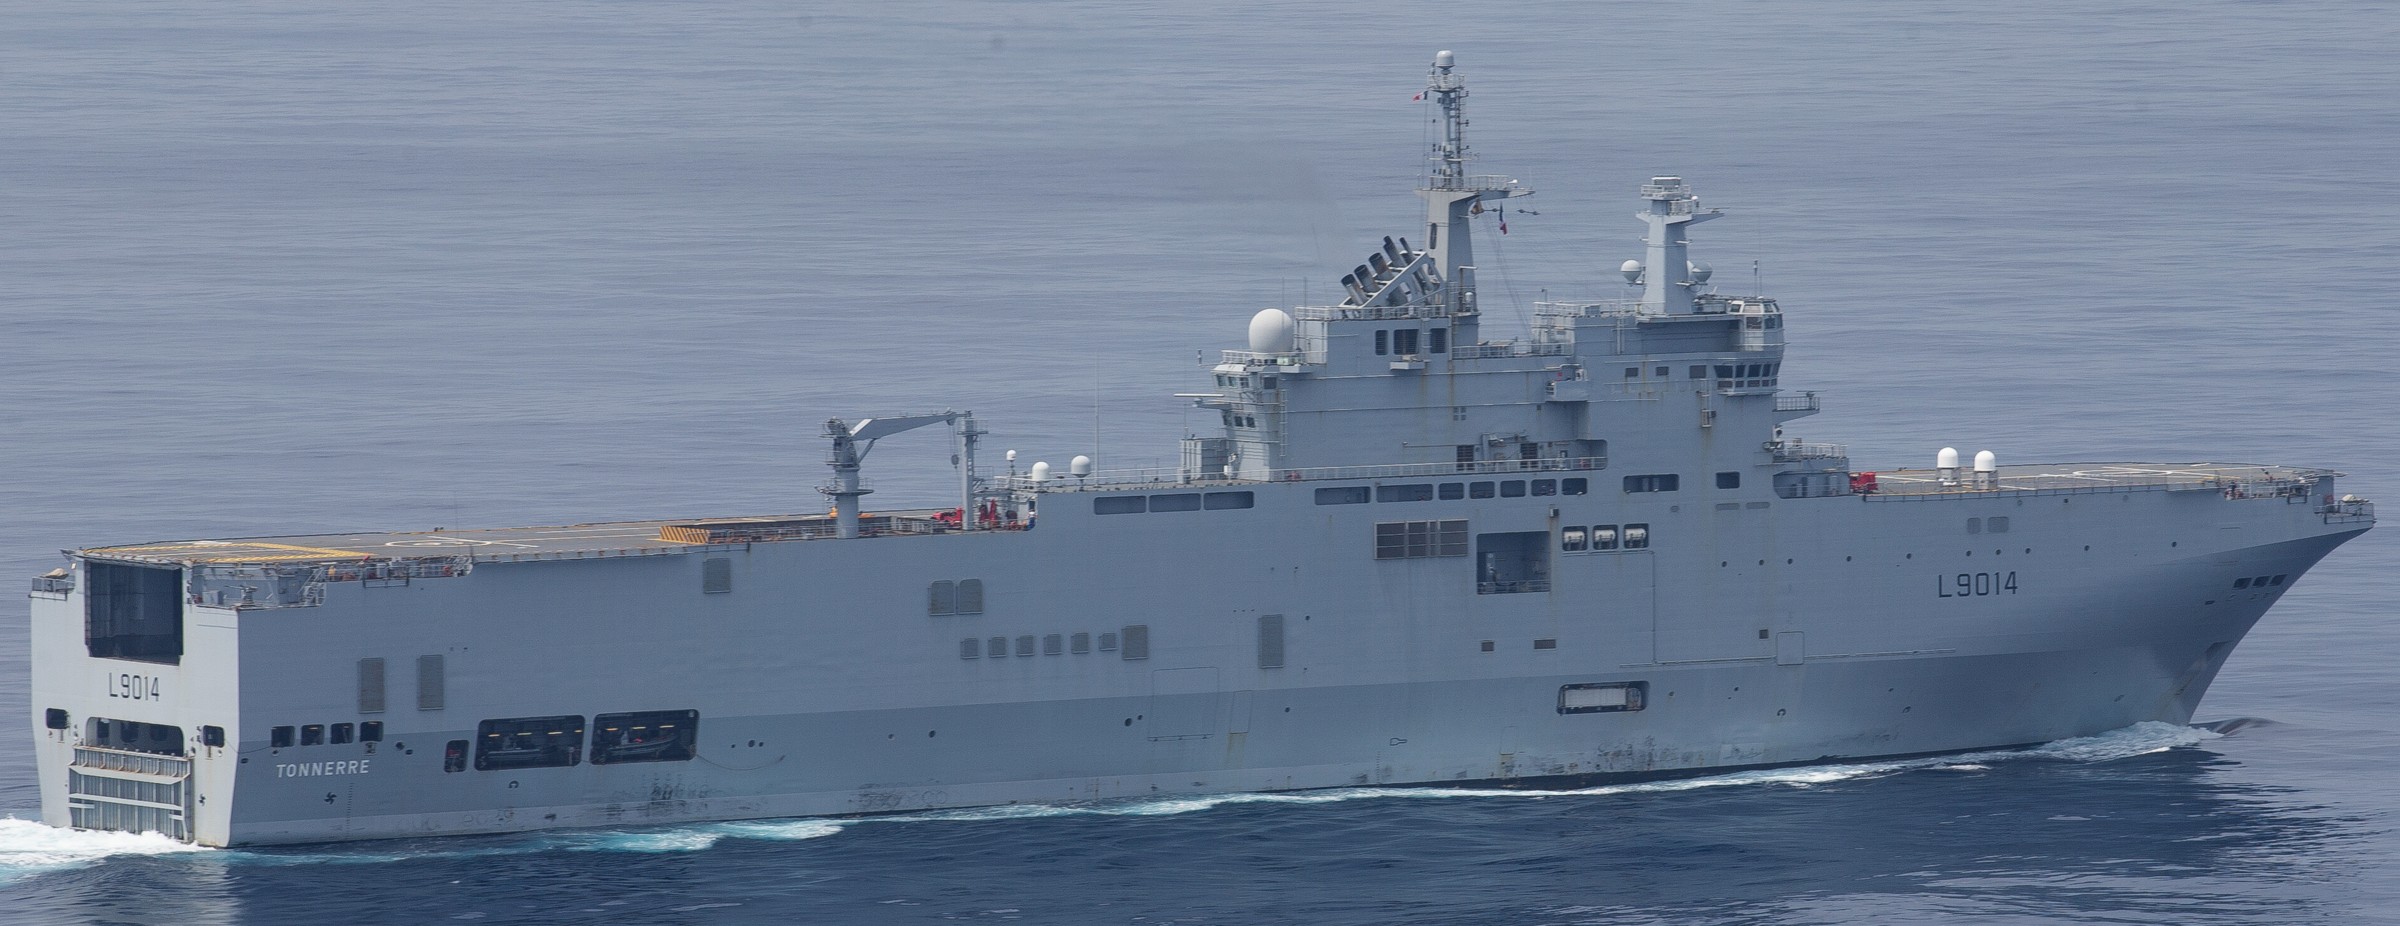 l-9014 fs tonnere mistral class amphibious assault command ship bpc french navy marine nationale 47